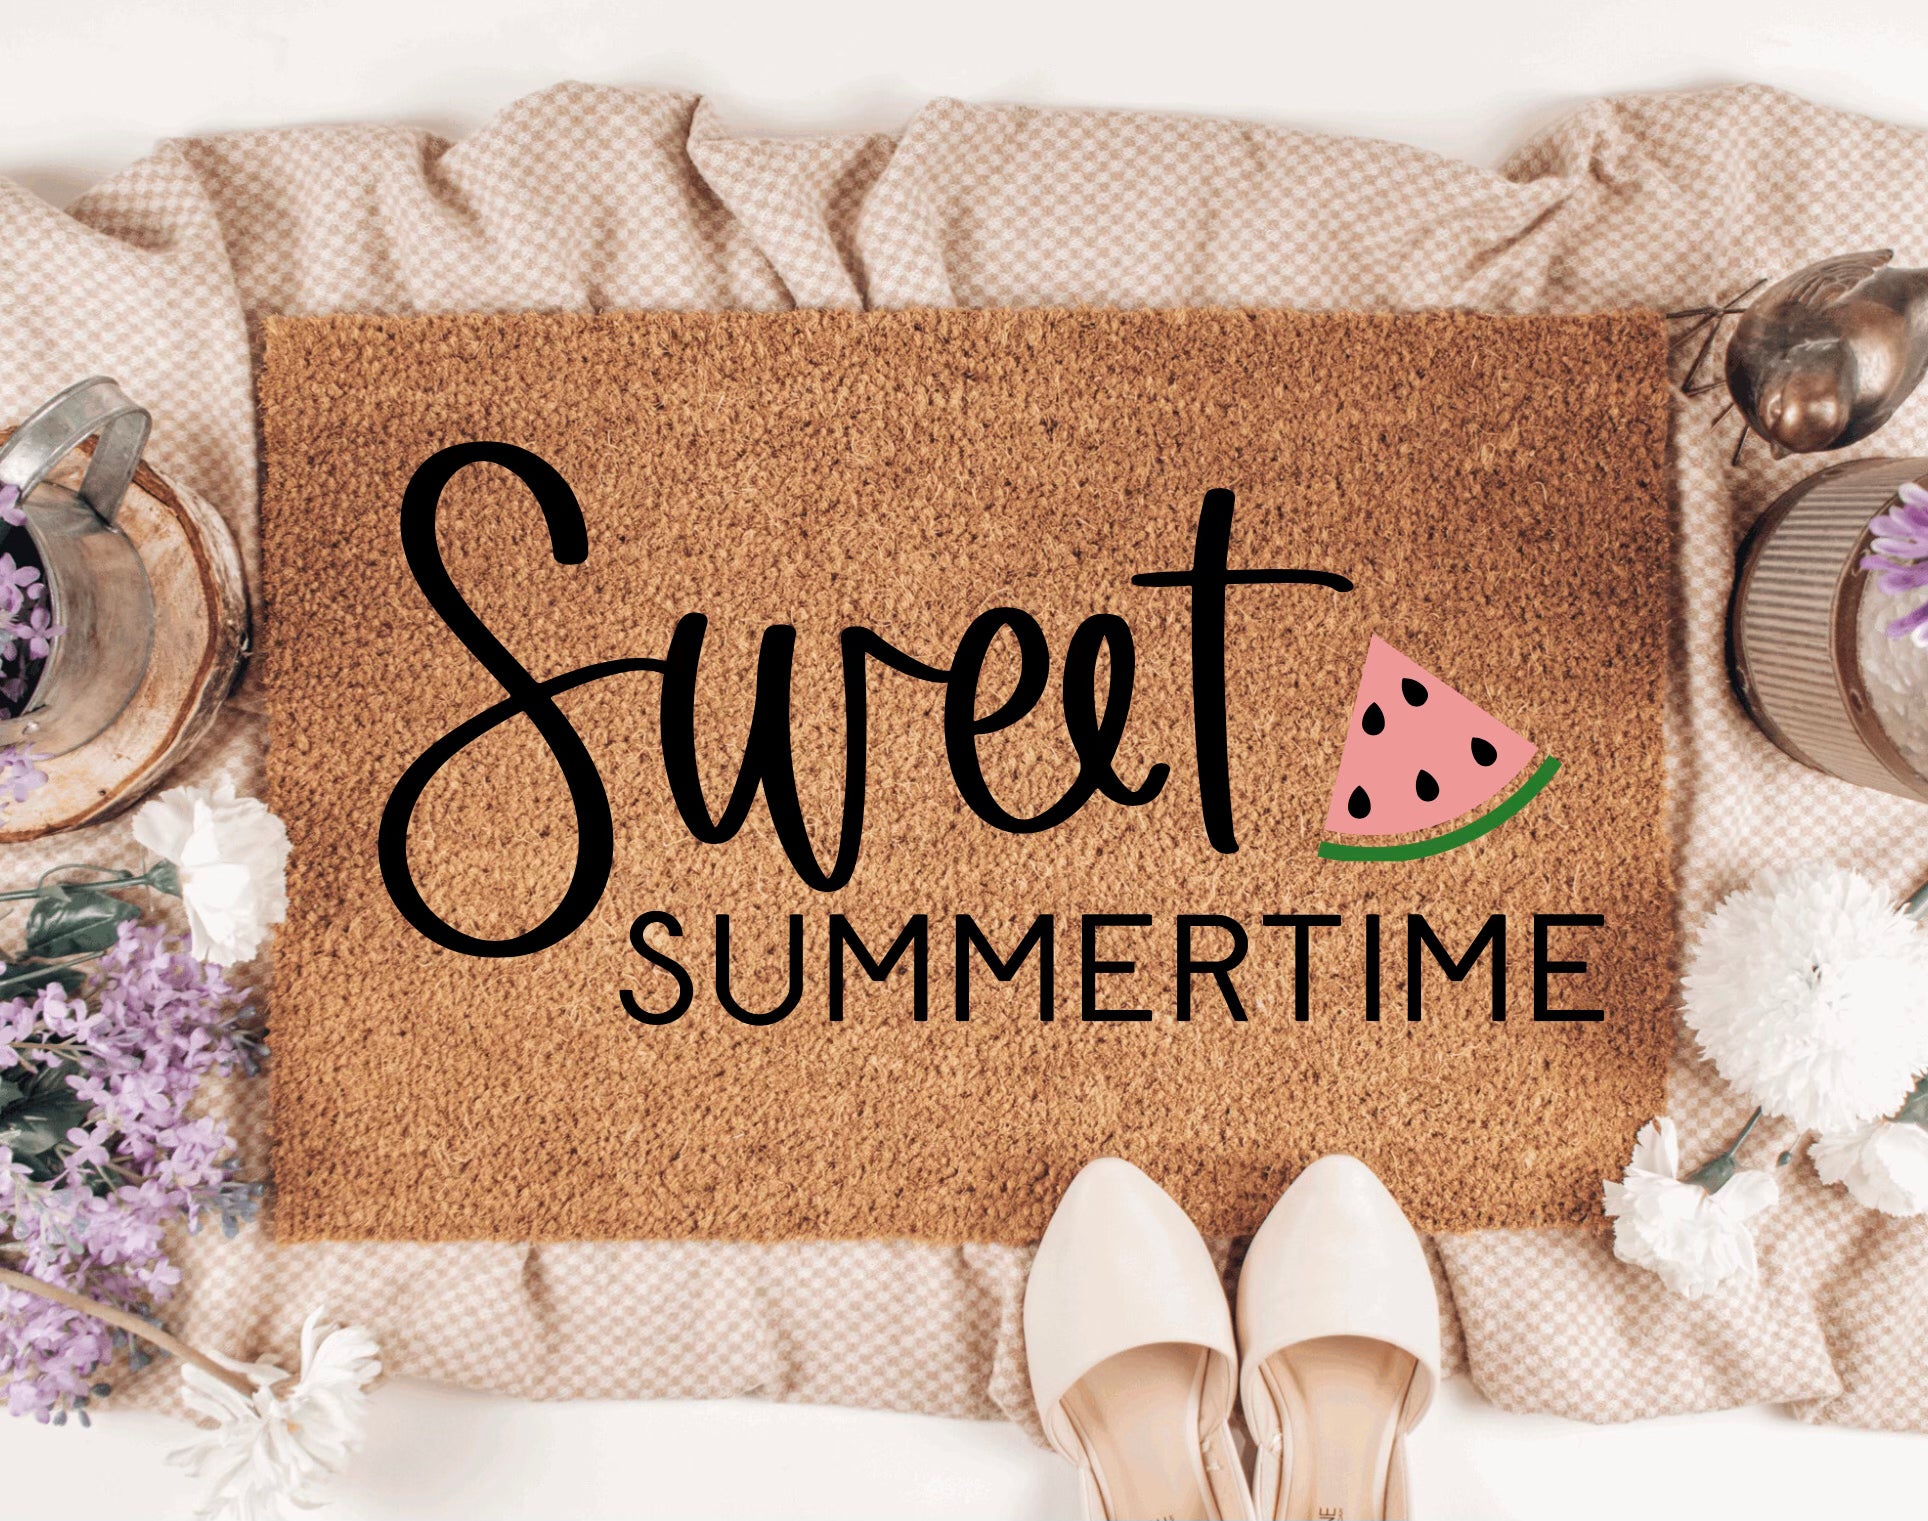 Sweet Summertime - Watermelon